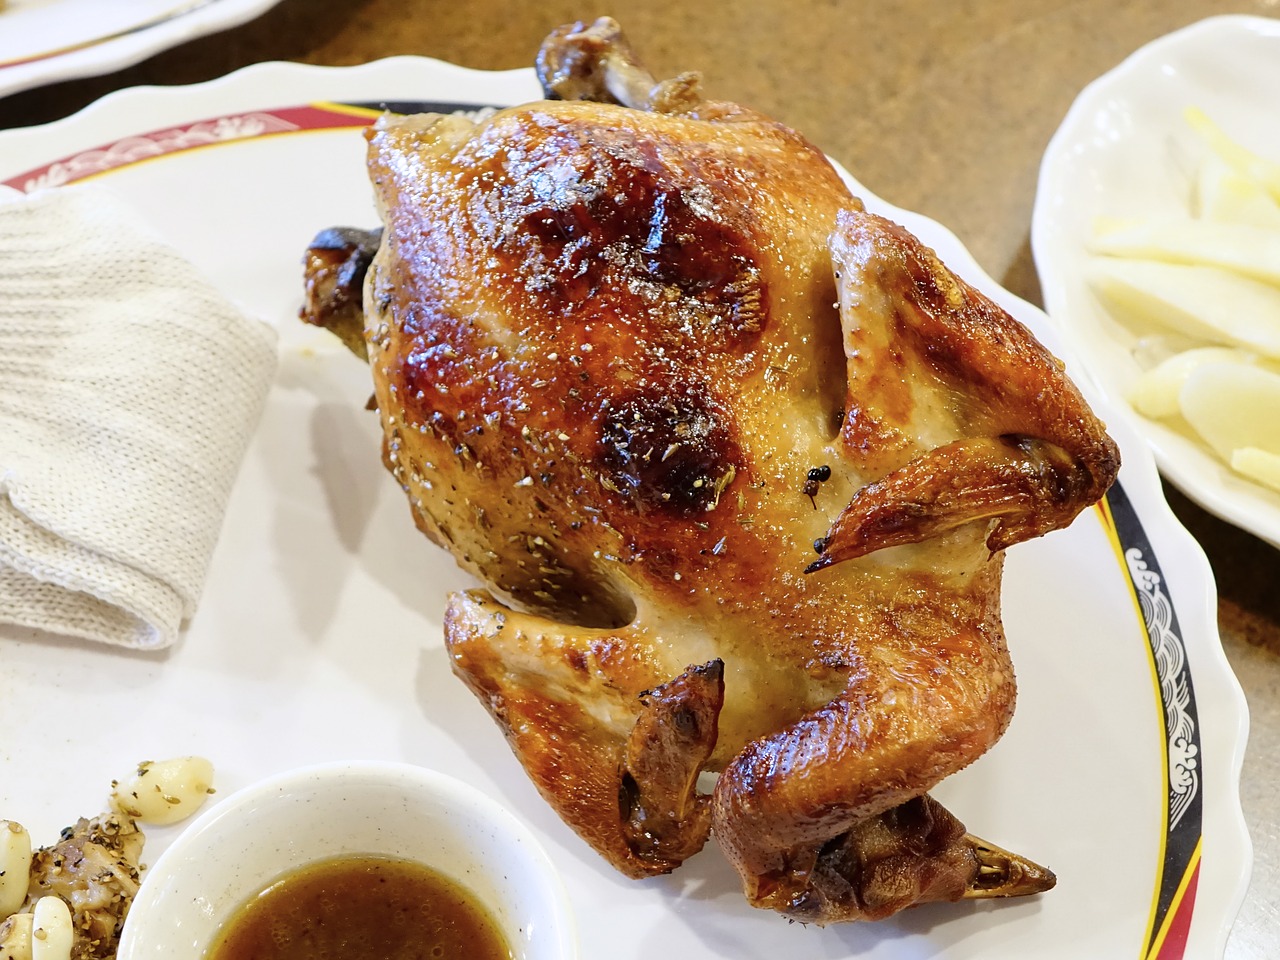 Cajun Roasted Turkey or Chicken